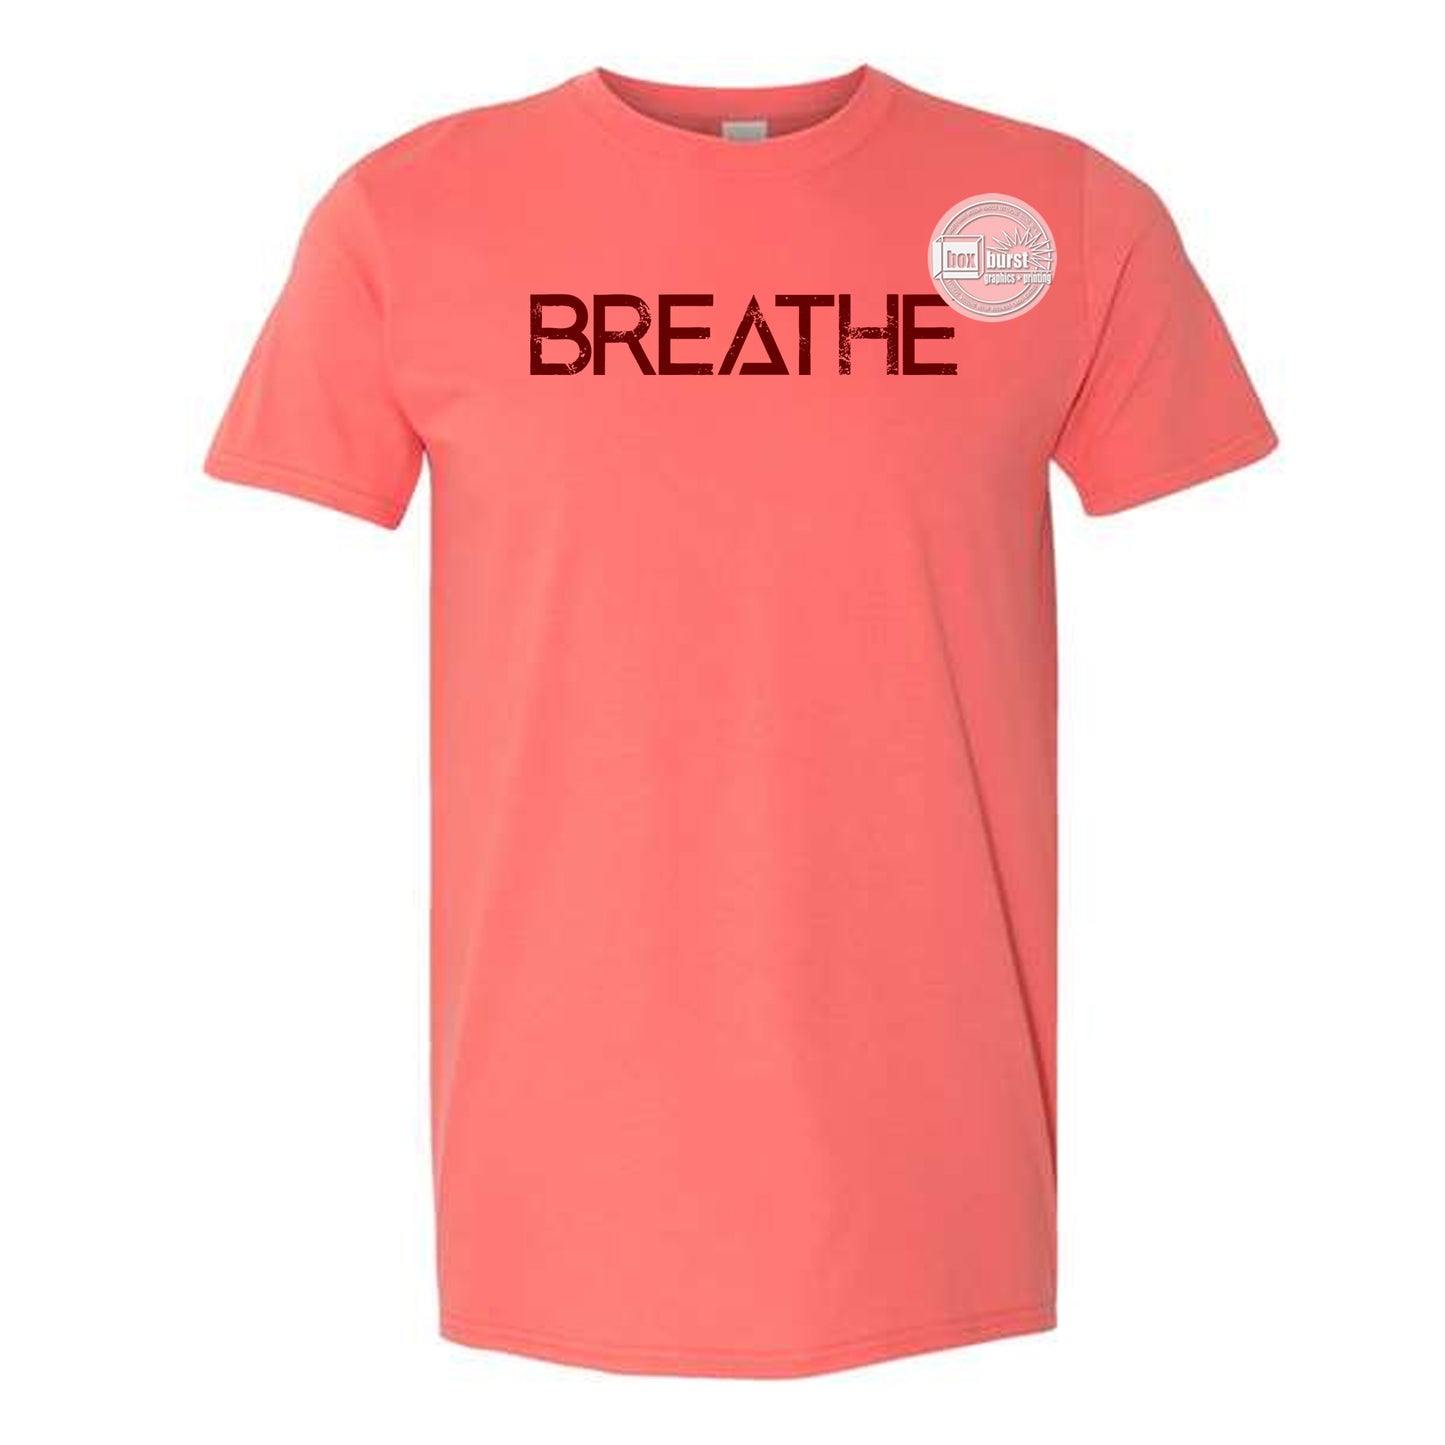 Breathe t-shirt yoga tshirt meditation t-shirt